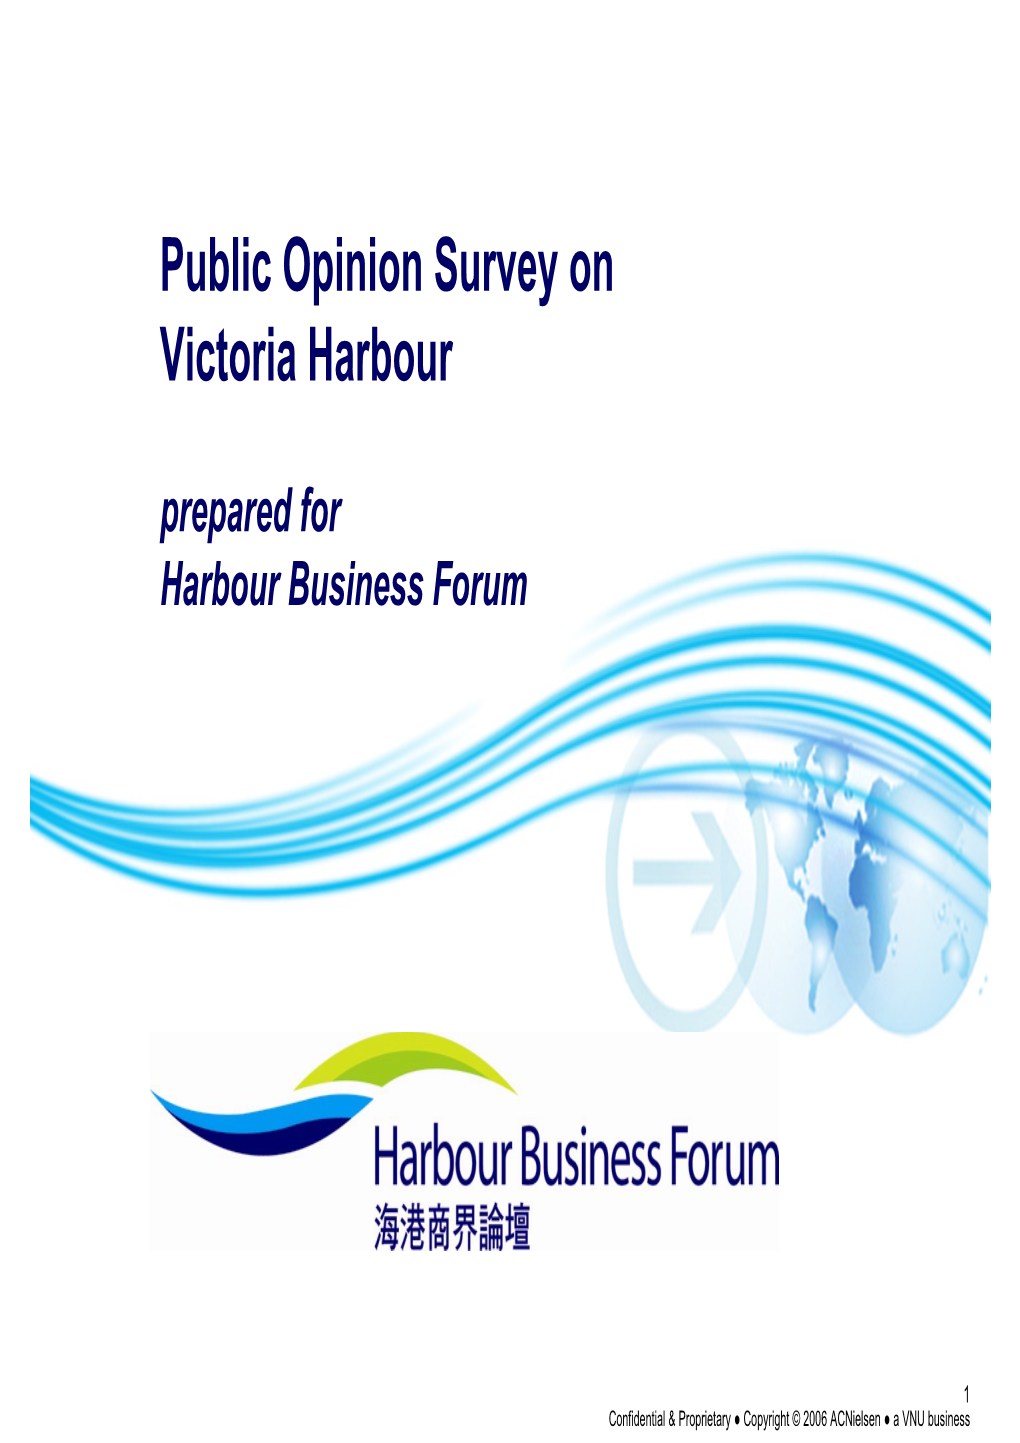 Public Opinion Survey on Victoria Harbour Prepared for Harbour Business Forum